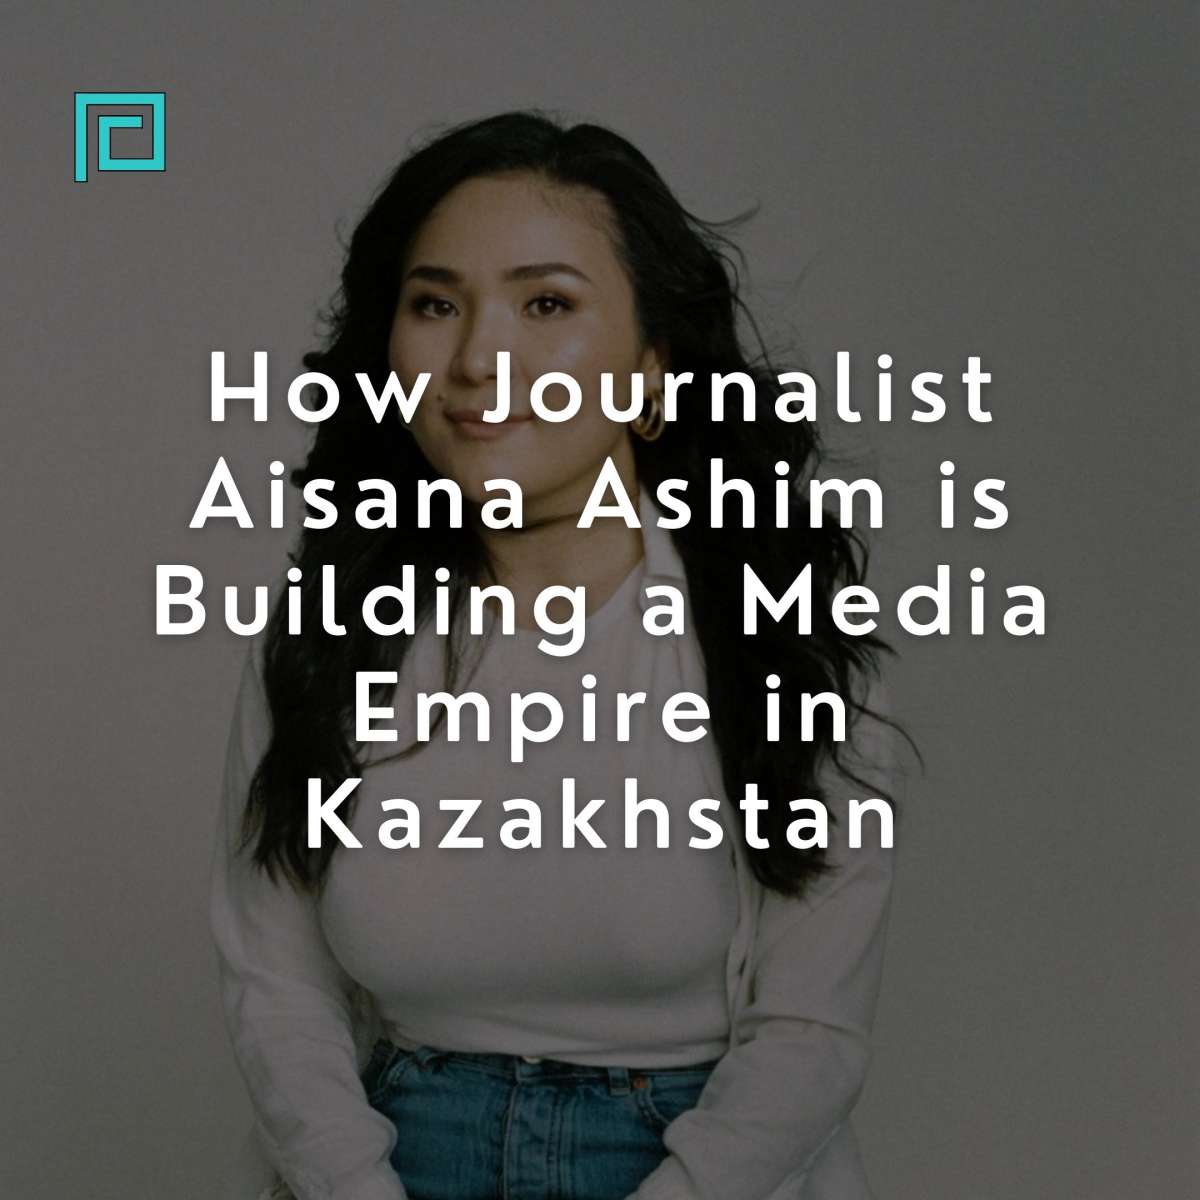 How Journalist Aisana Ashim is Building a Media Empire in Kazakhstan